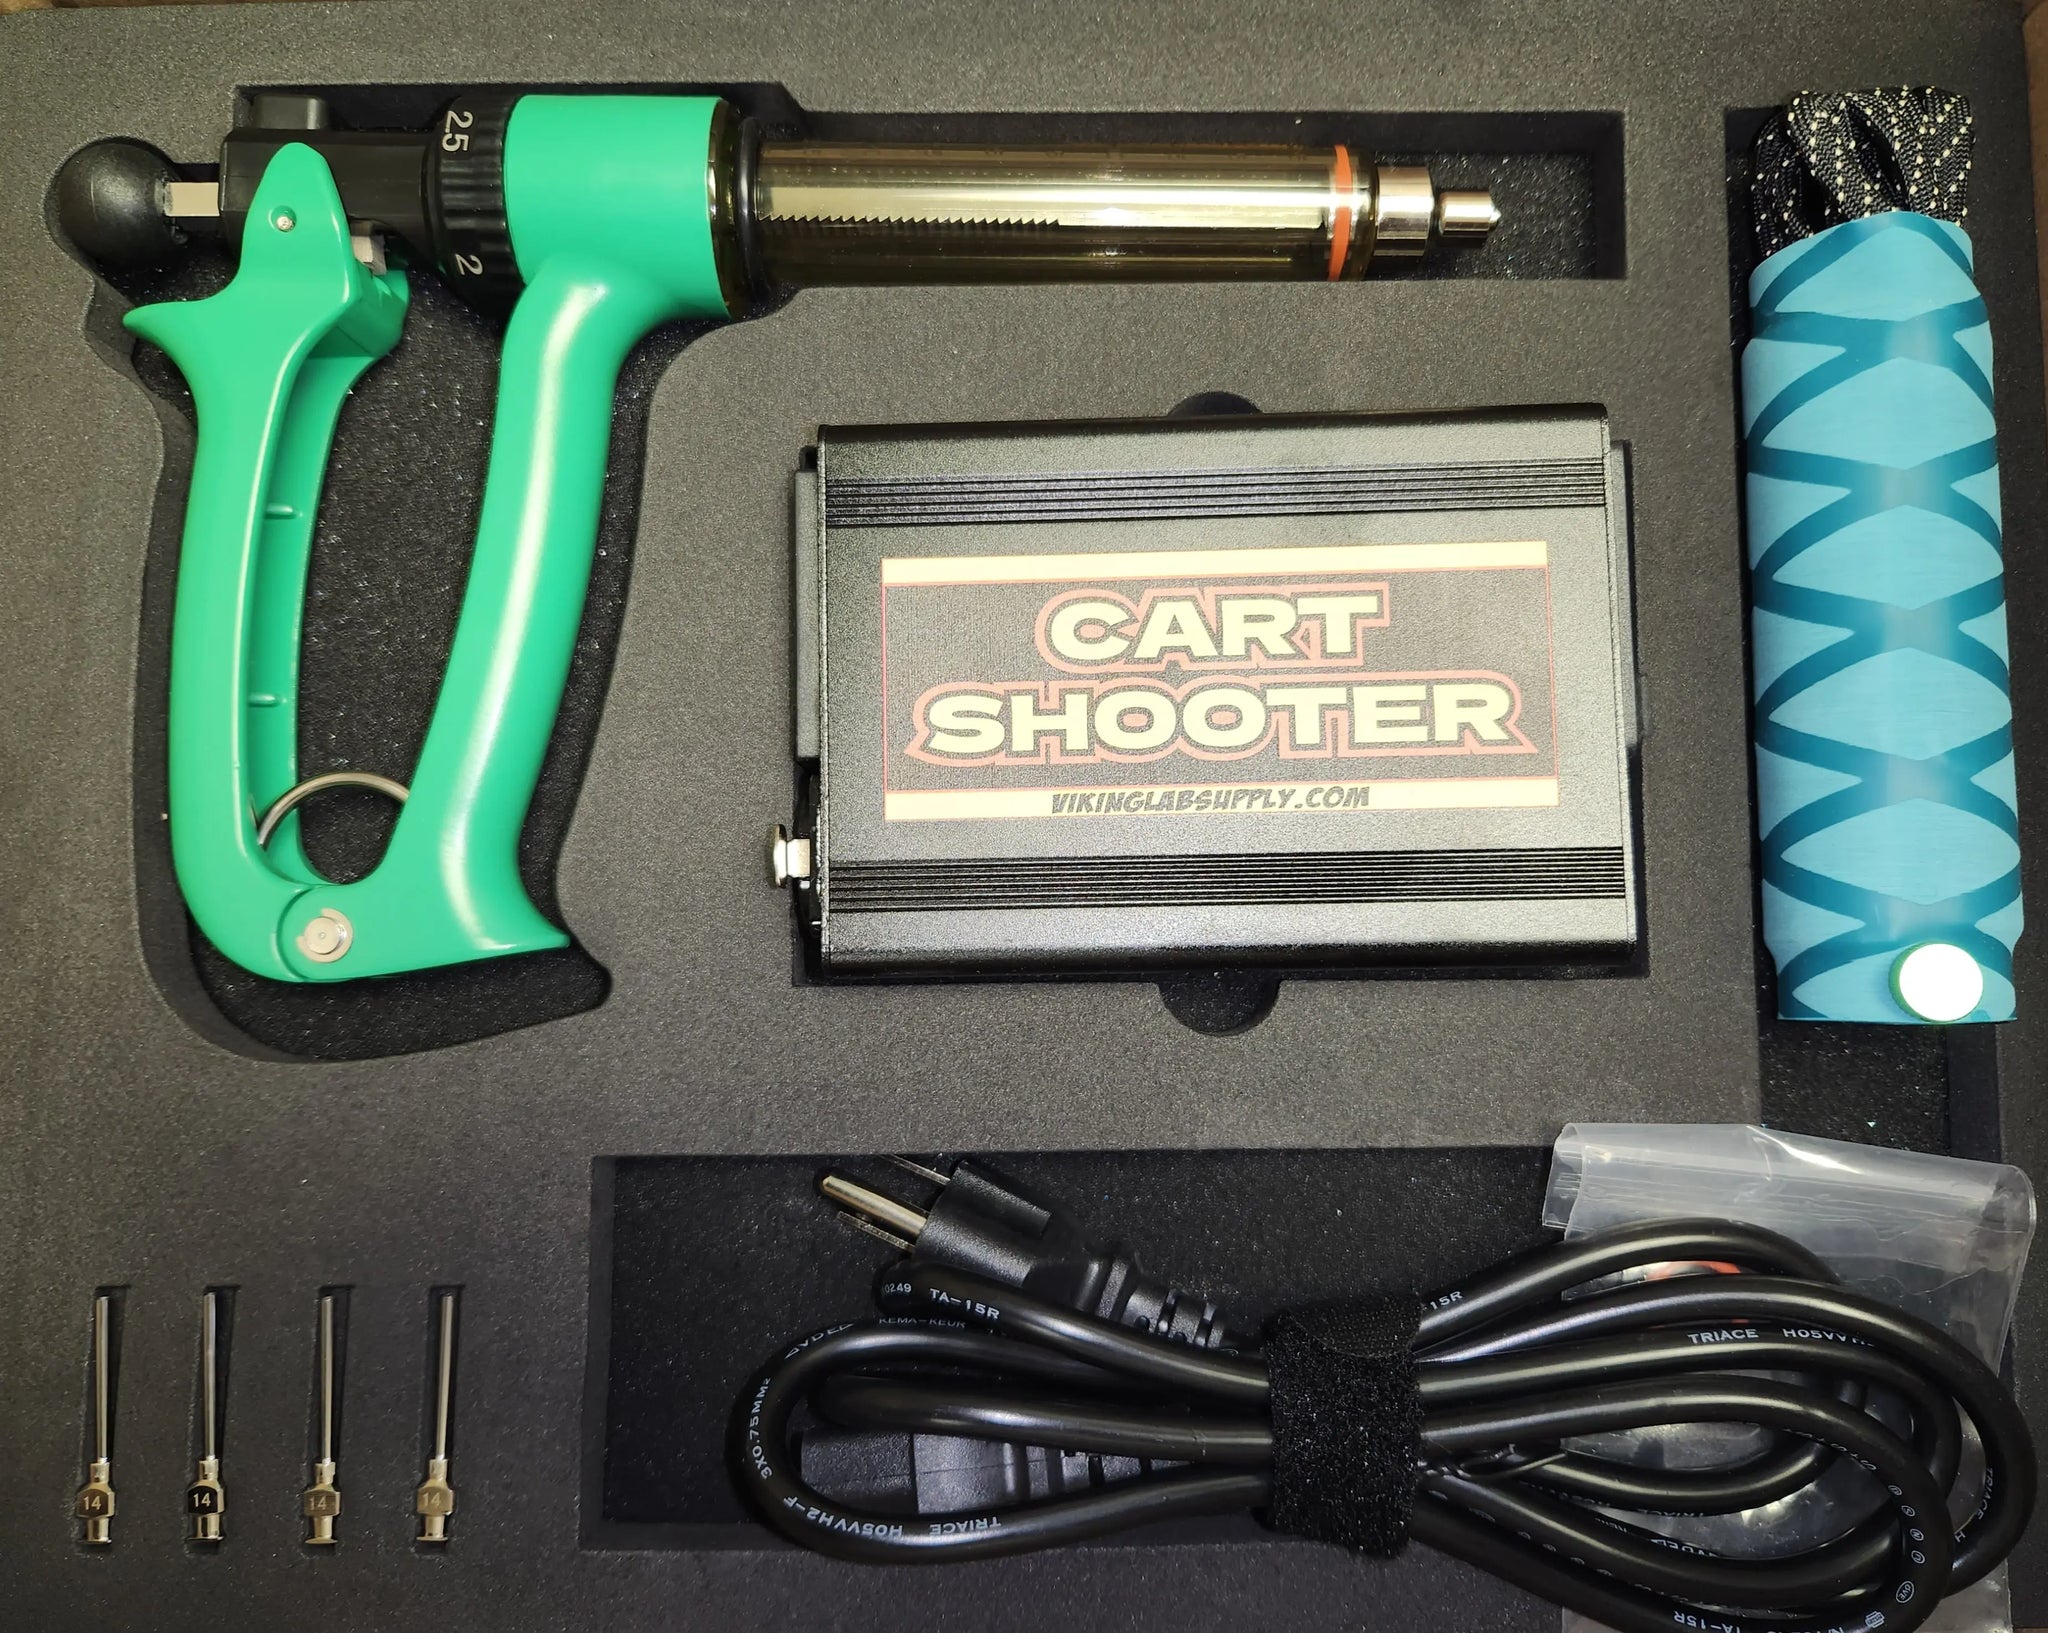 The "ORIGINAL" Hand Held Cart Shooter Kit -  50ml